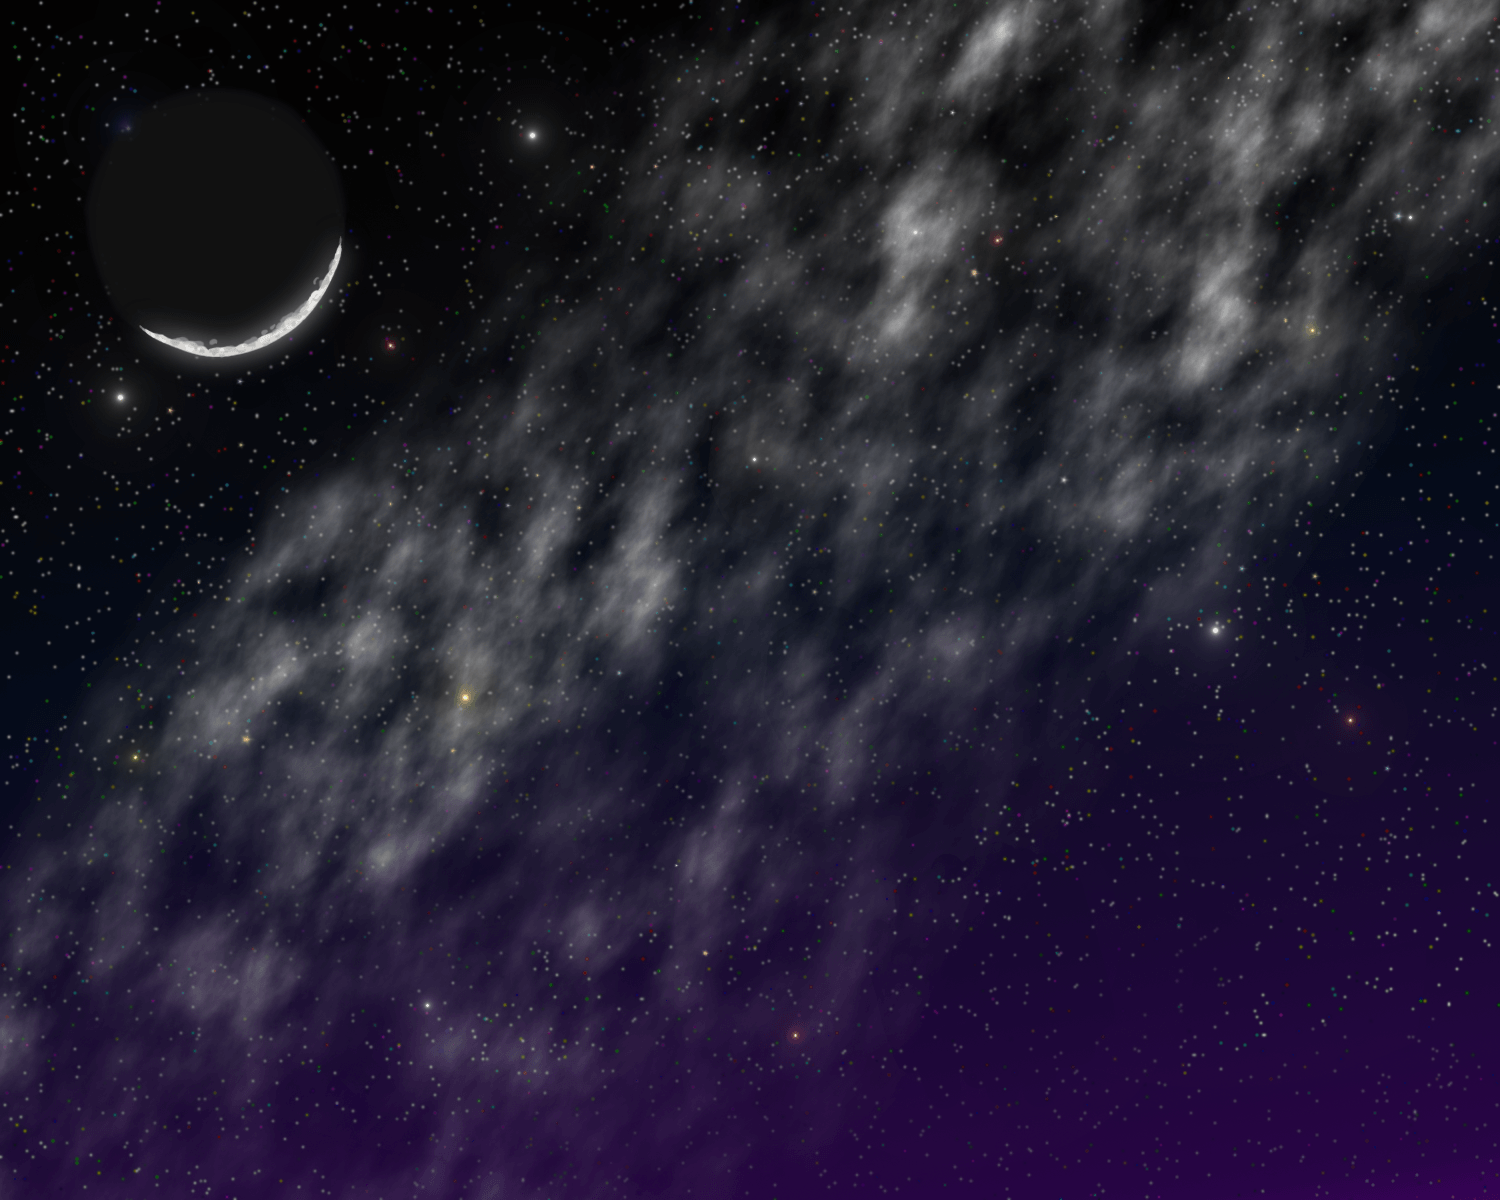 Making a Night Sky in GIMP